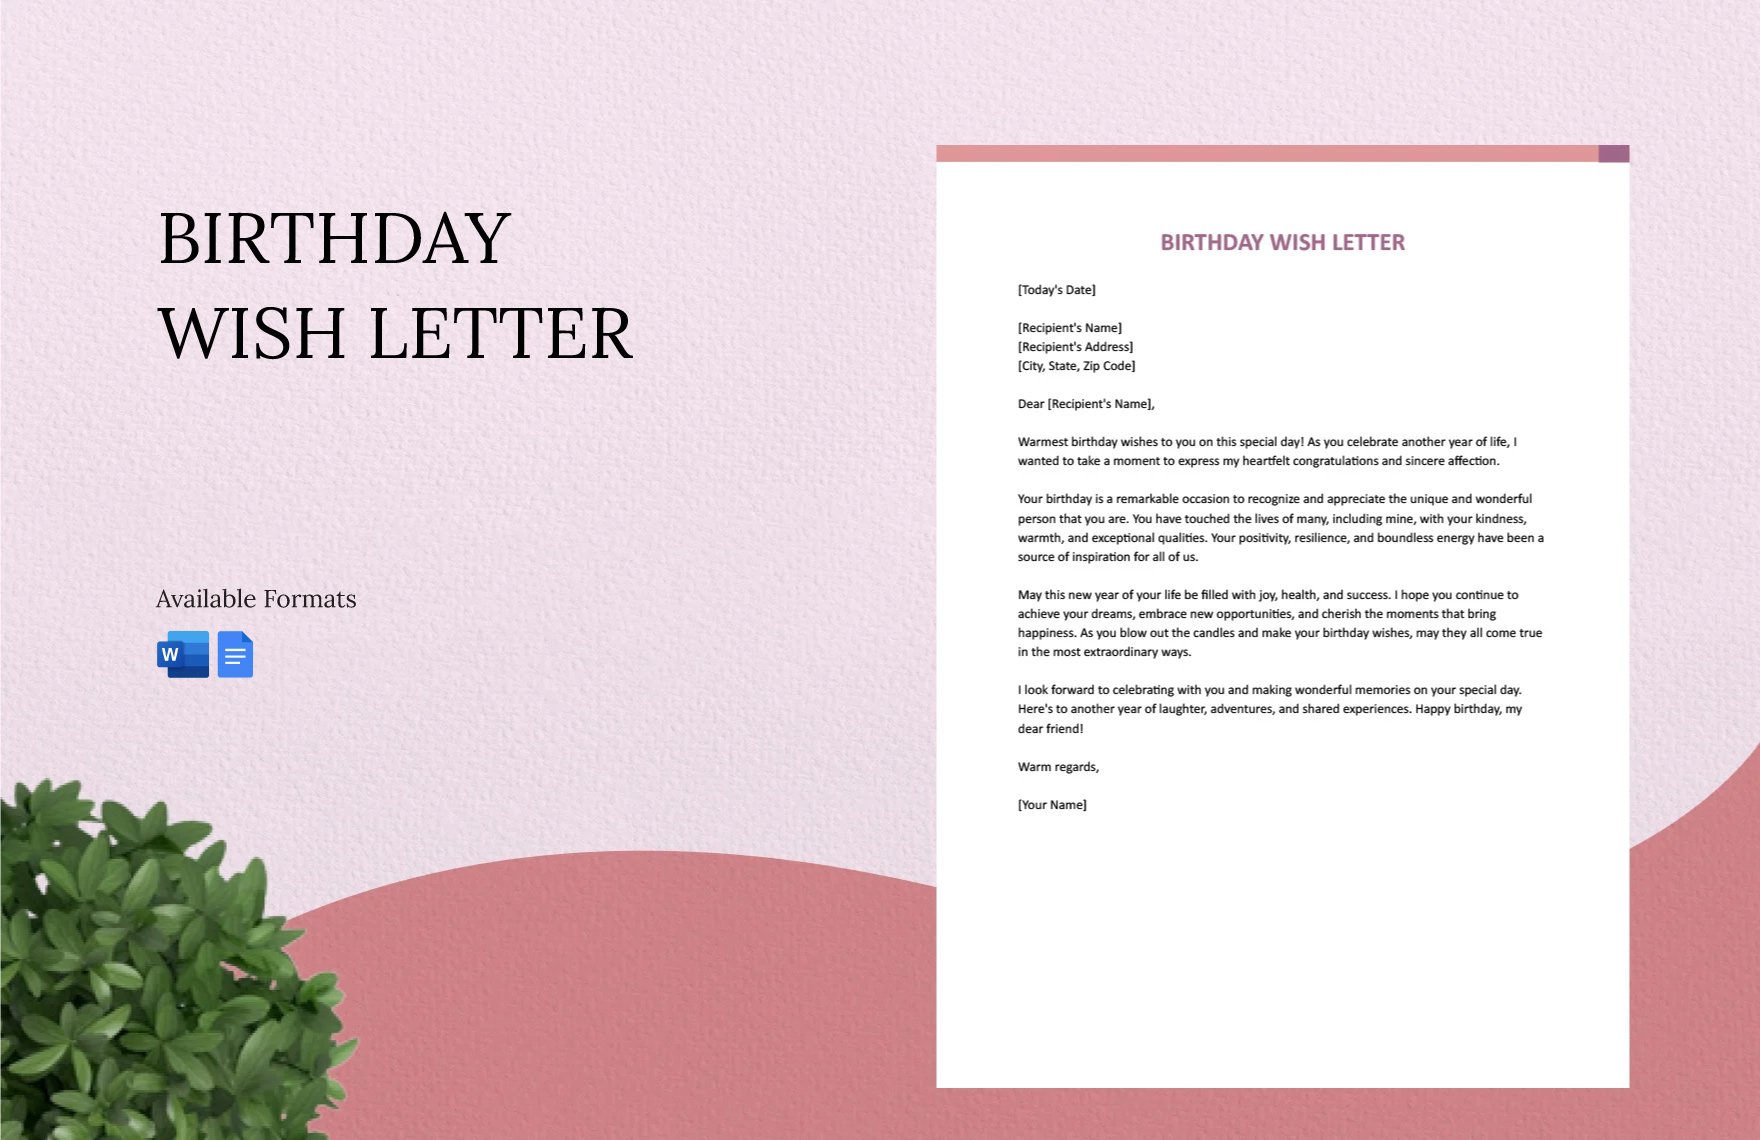 Birthday Wish Letter